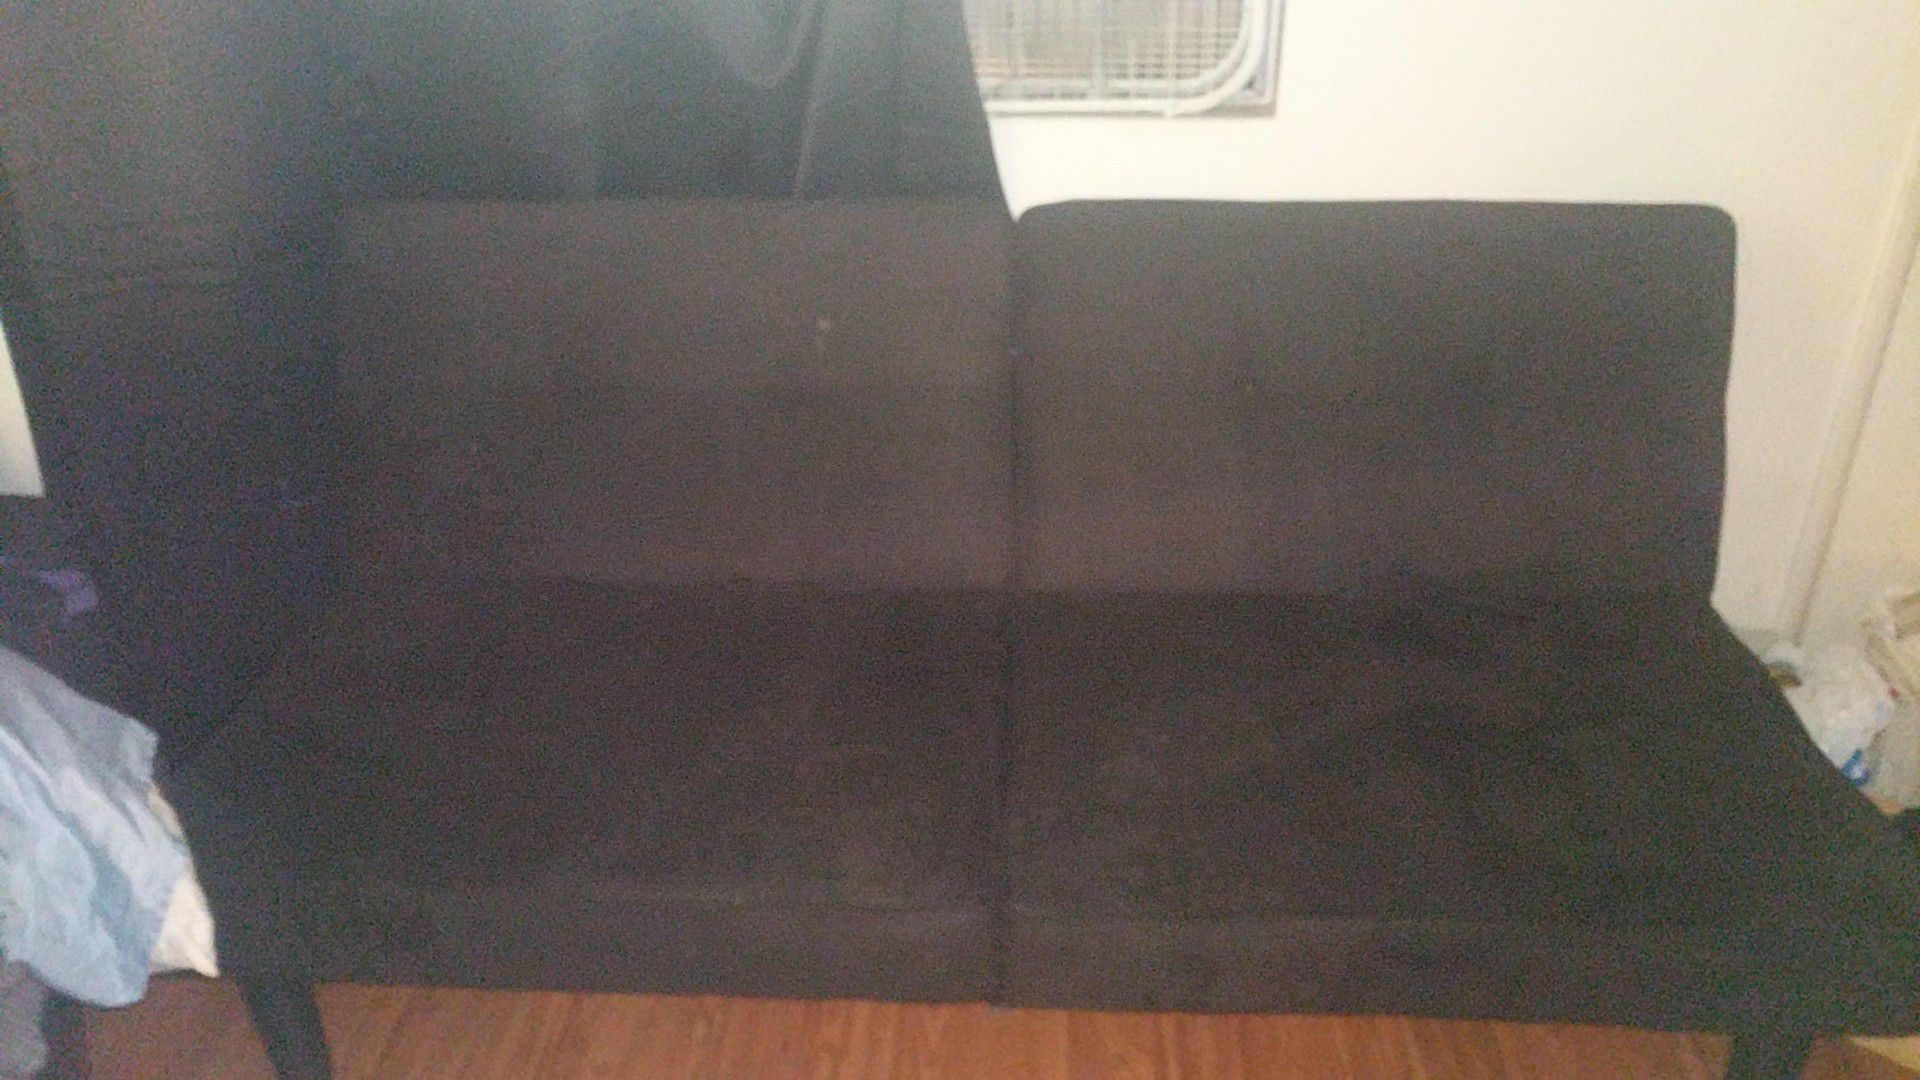 IKEA futon in black